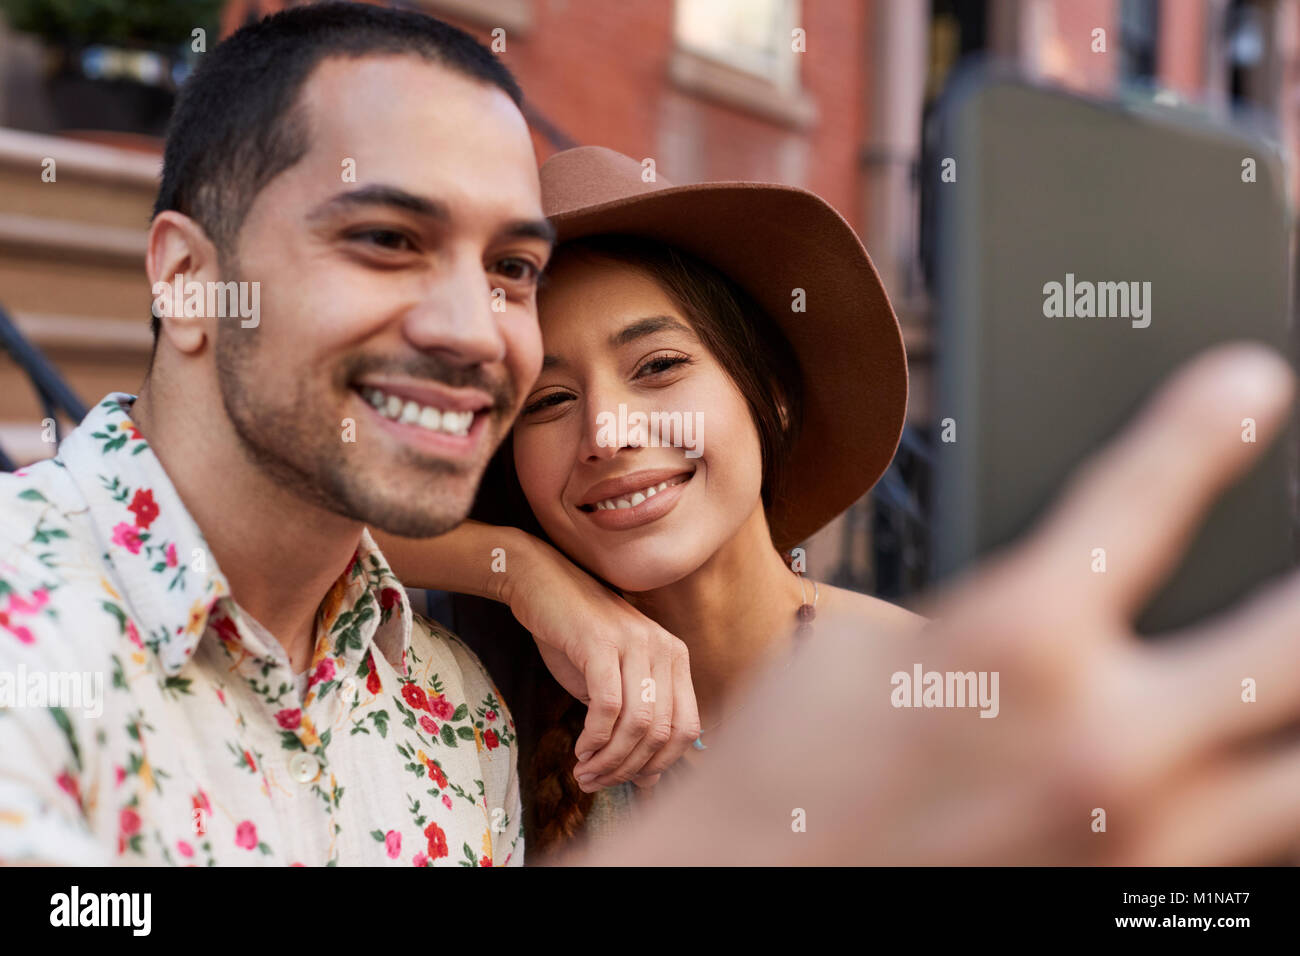 Couple Posing For Selfie On Street In New York City Stock Photo